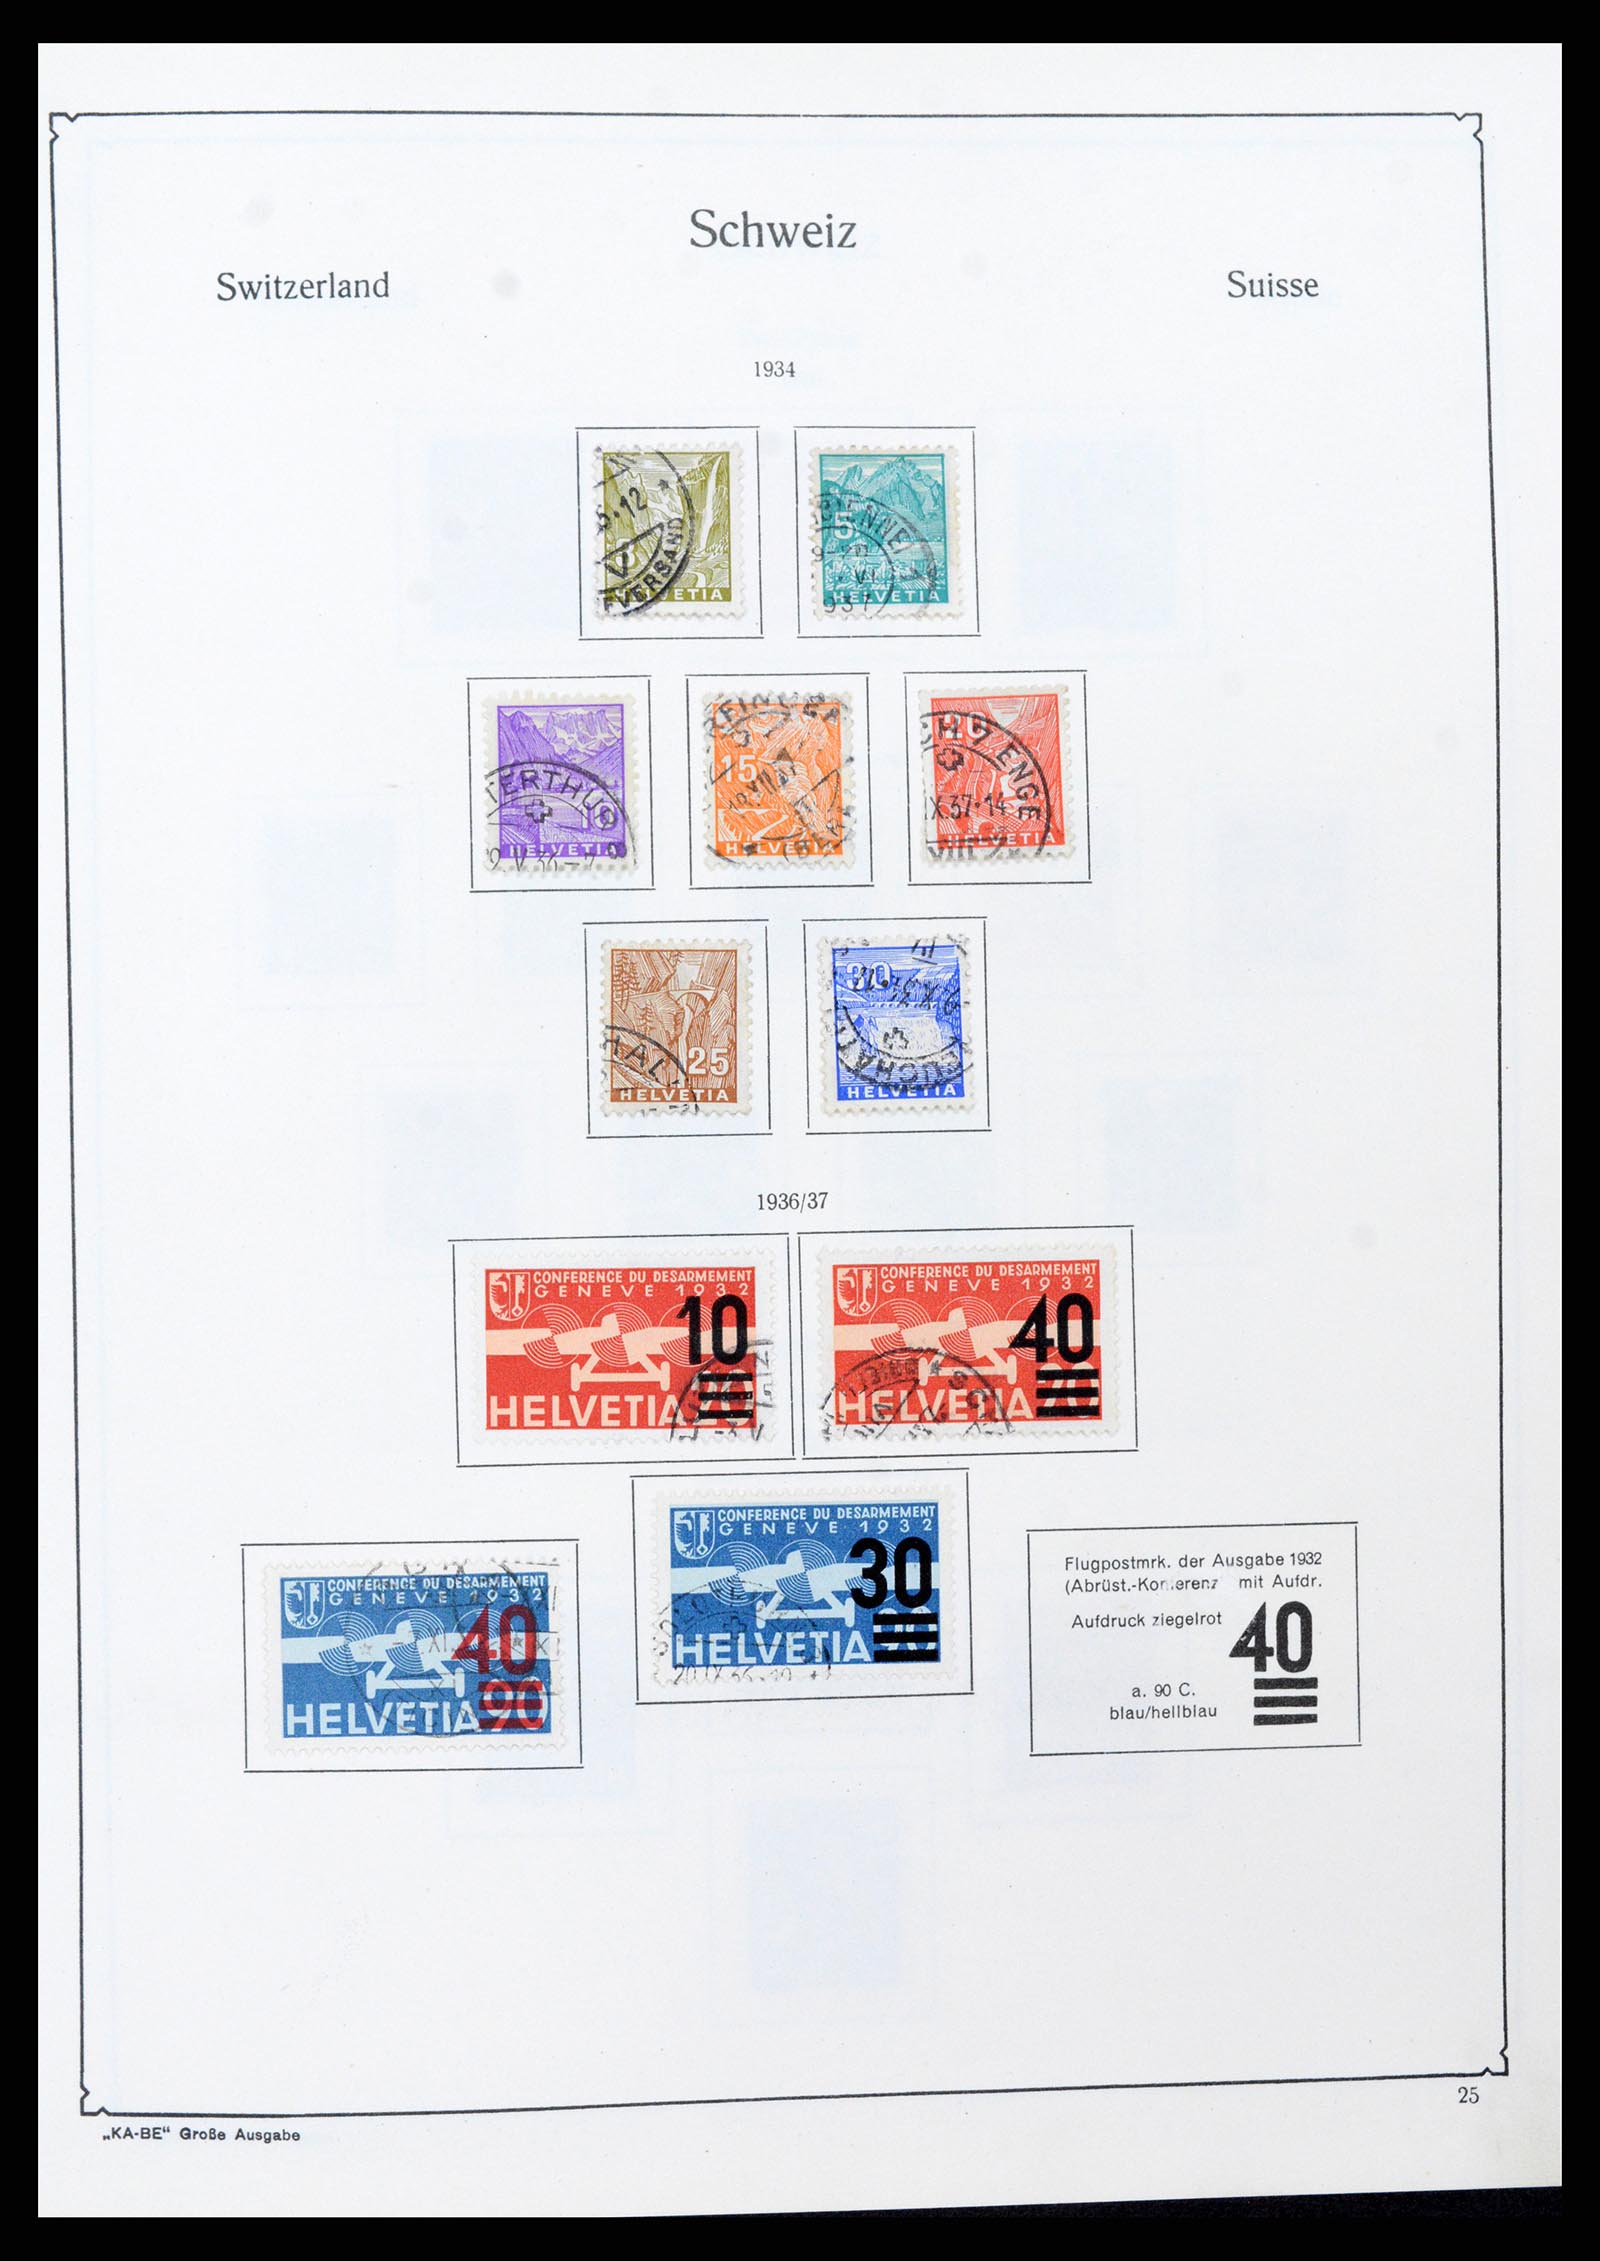 37588 024 - Stamp collection 37588 Switzerland 1854-1974.